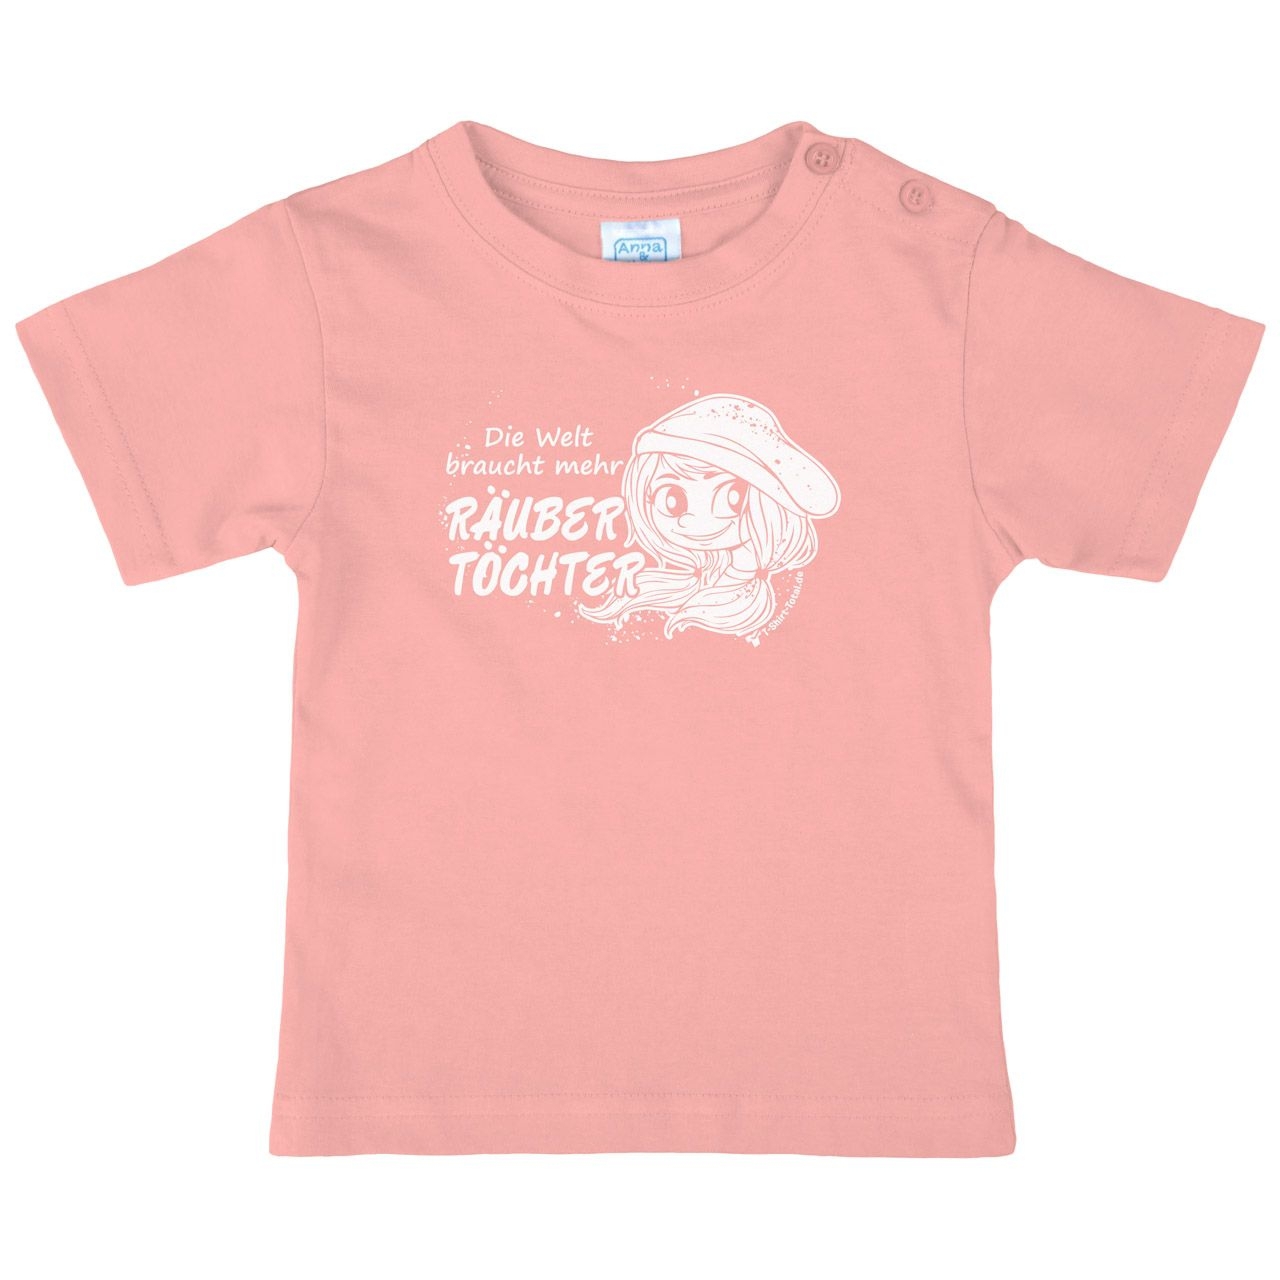 Räubertöchter Kinder T-Shirt rosa 110 / 116